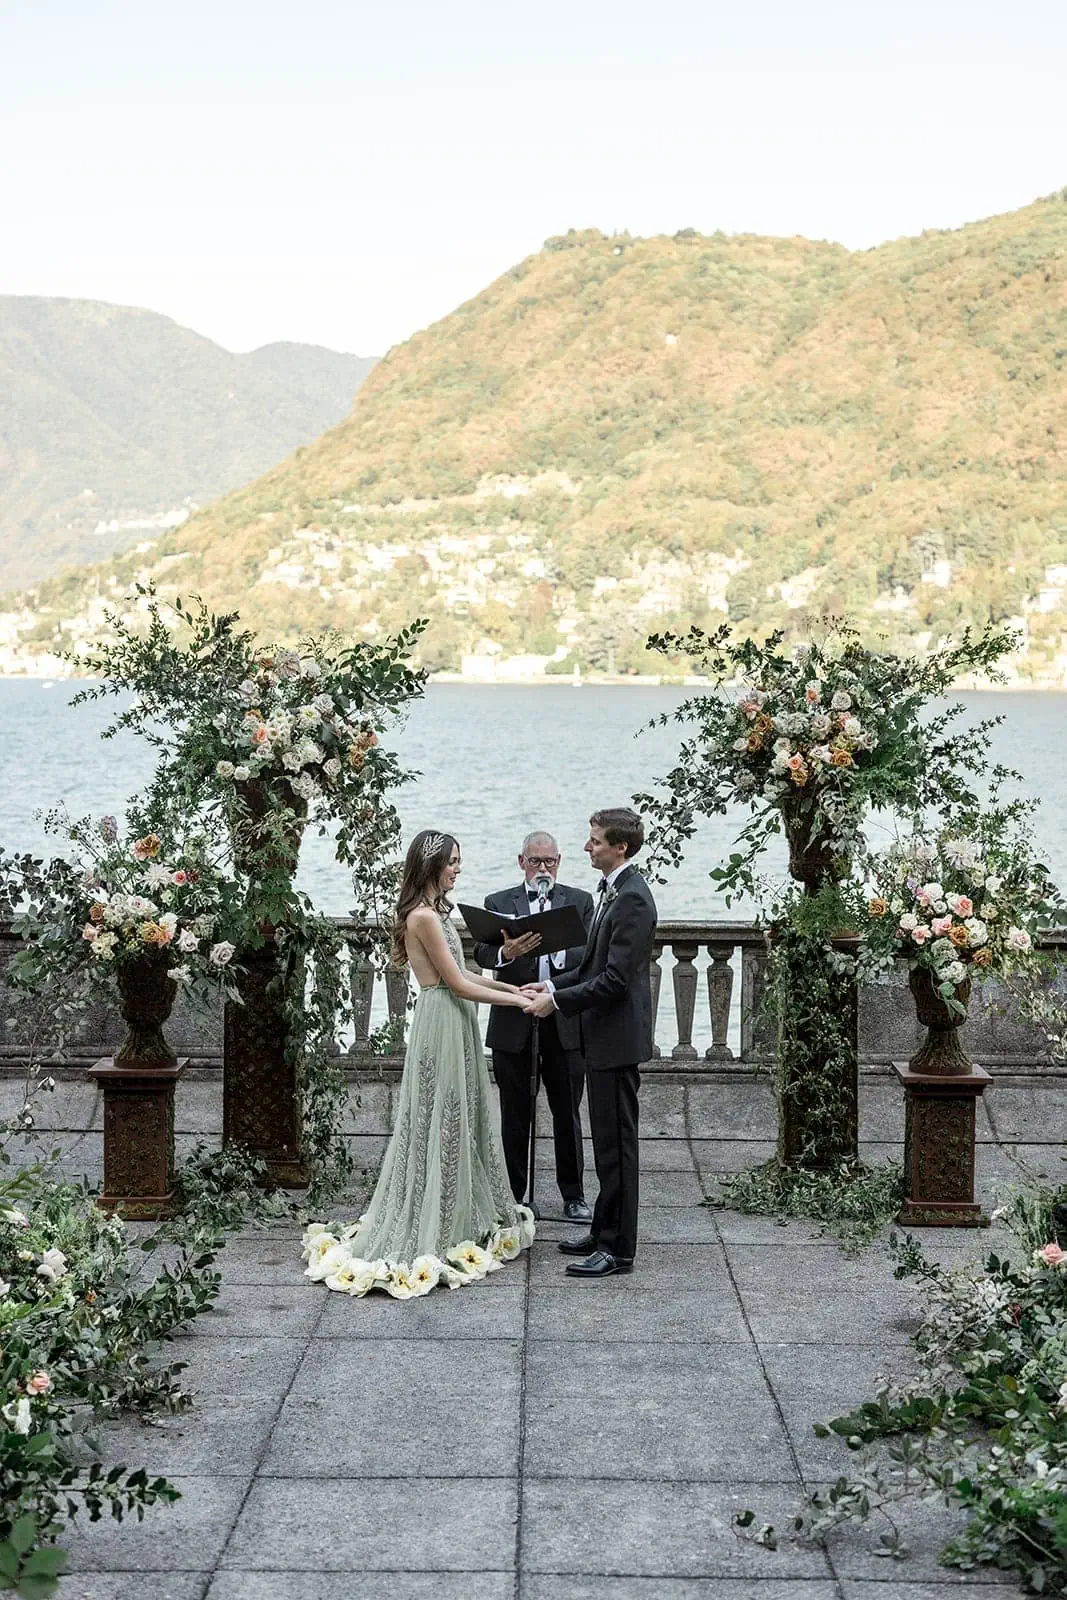 Fashion-Focused Villa Pizzo Wedding of the Year